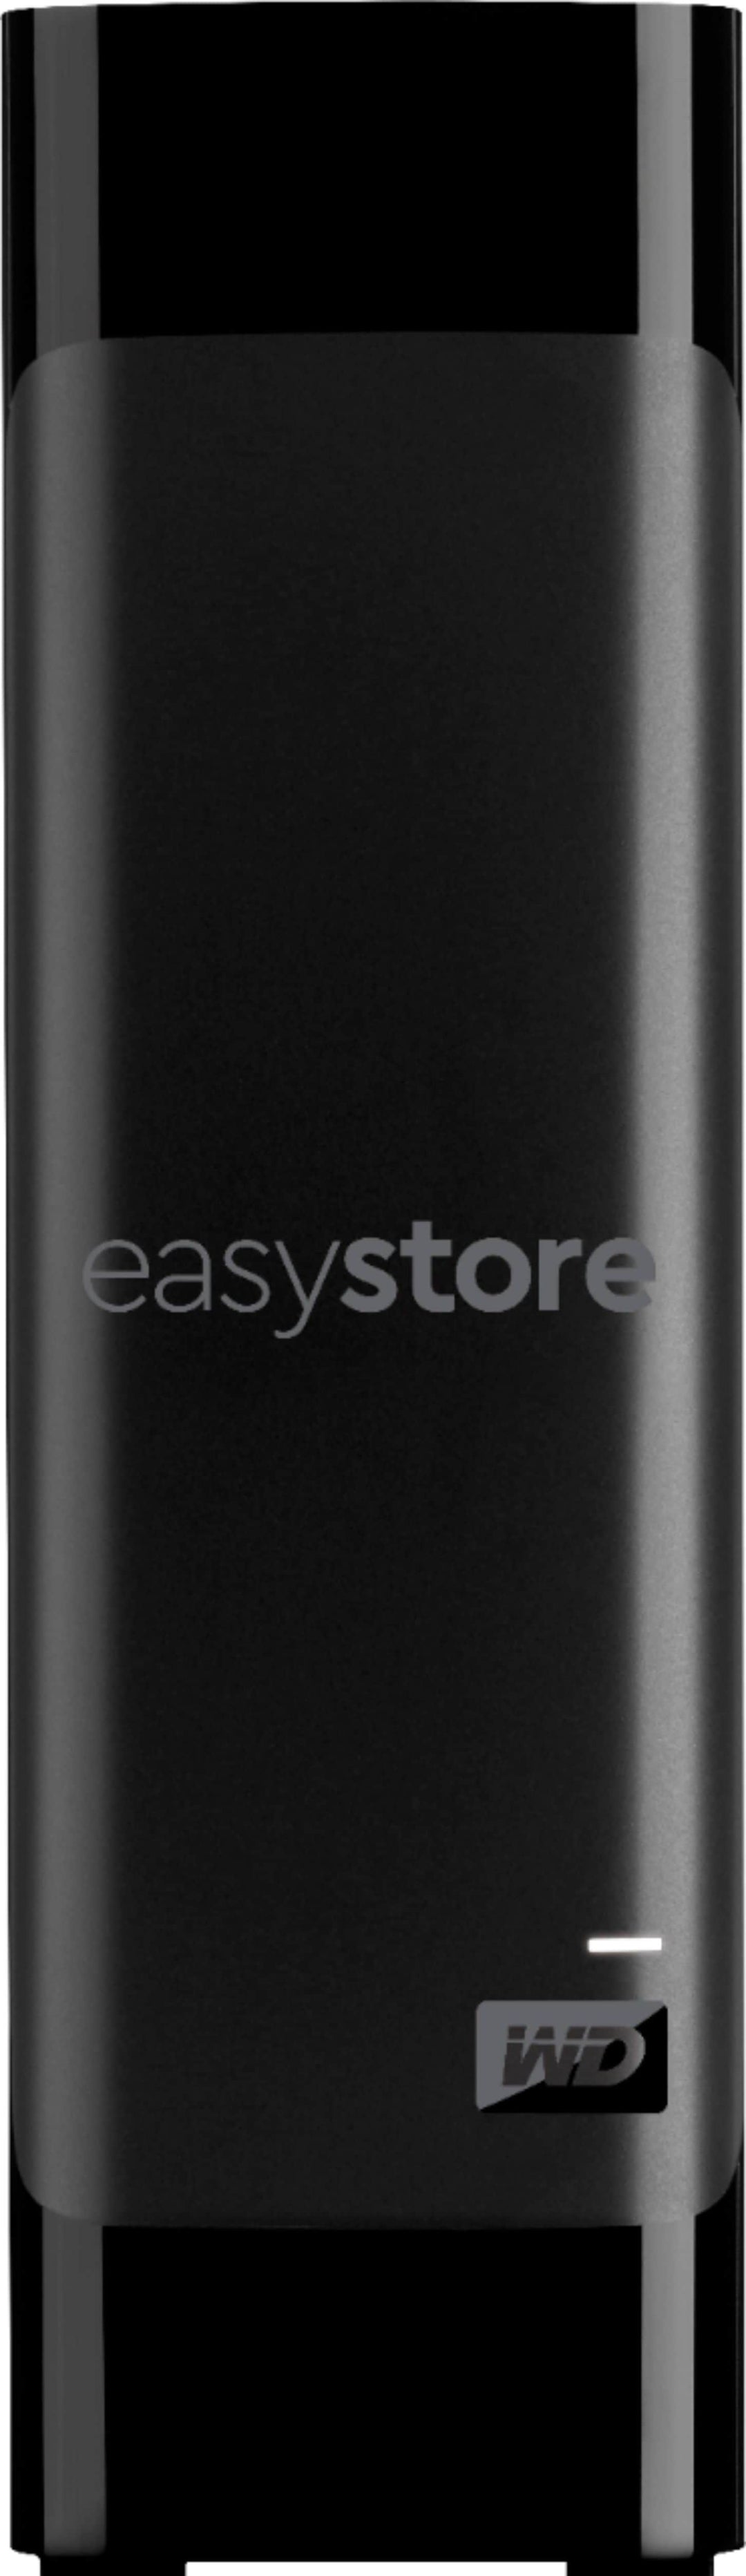 WD - easystore 14TB External USB 3.0 Hard Drive - Black_0